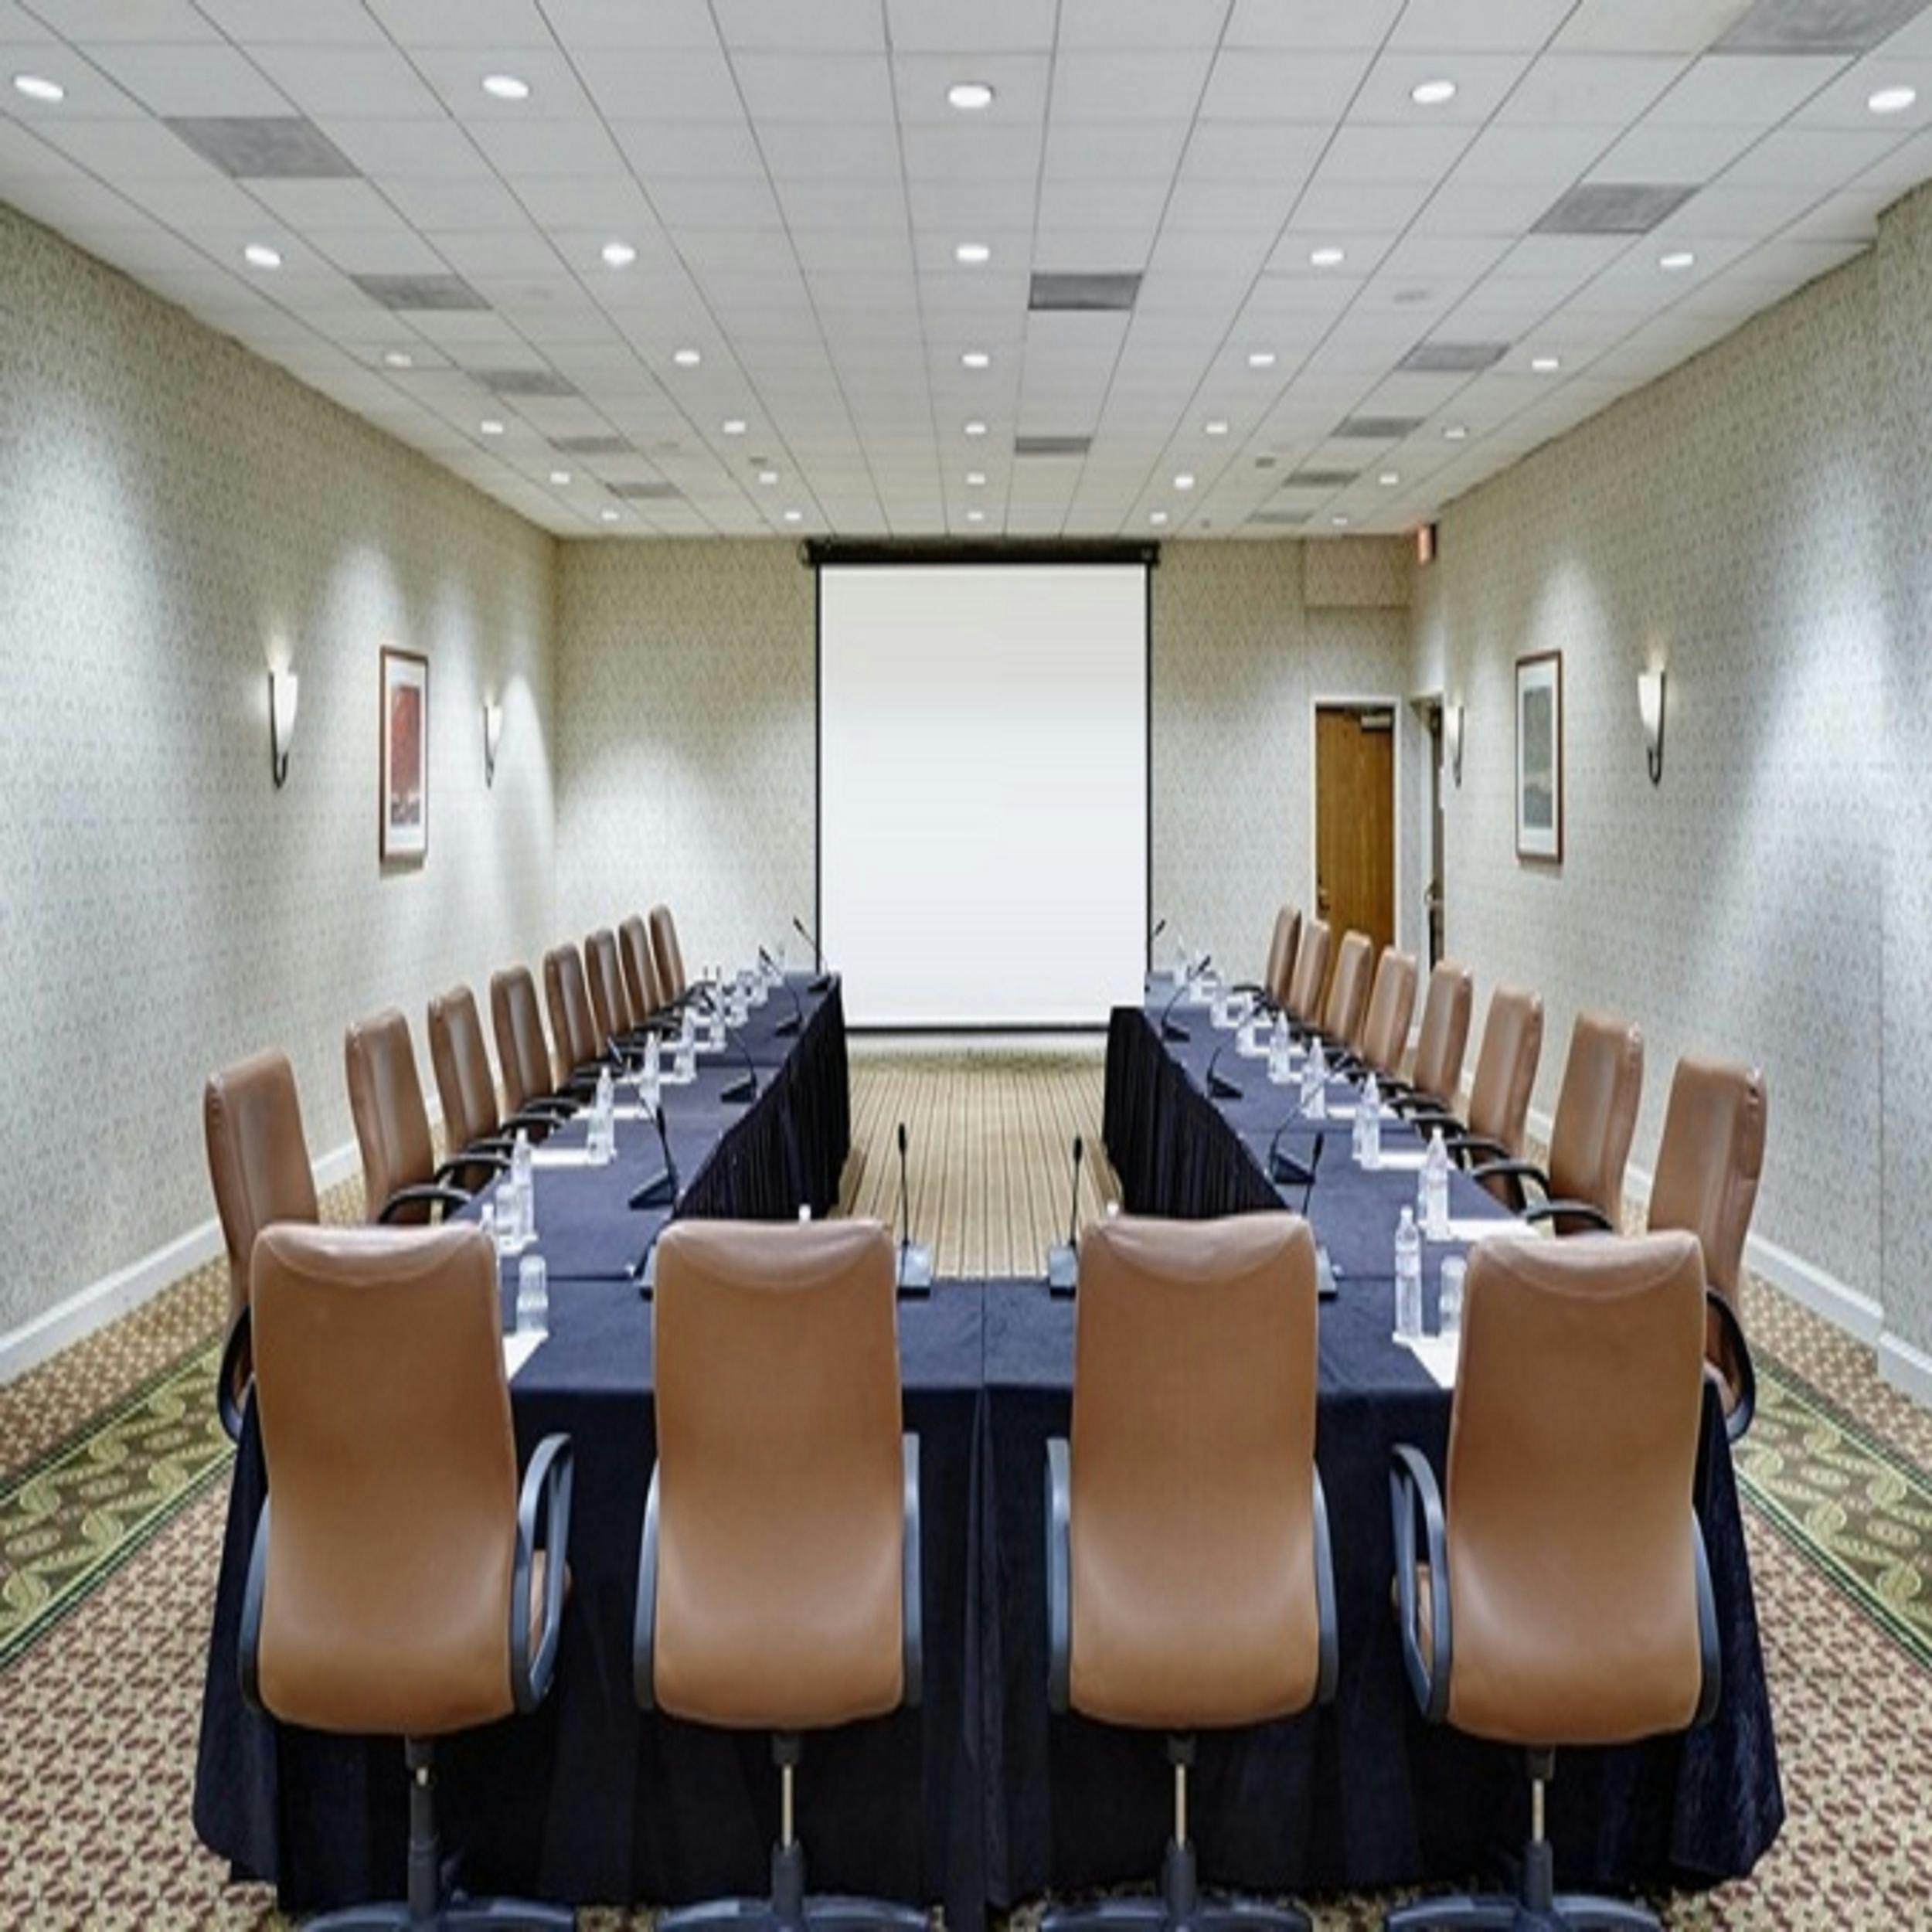 Free stock photo of conference room washington DC, Hourly office space Washington DC, Hourly room rental